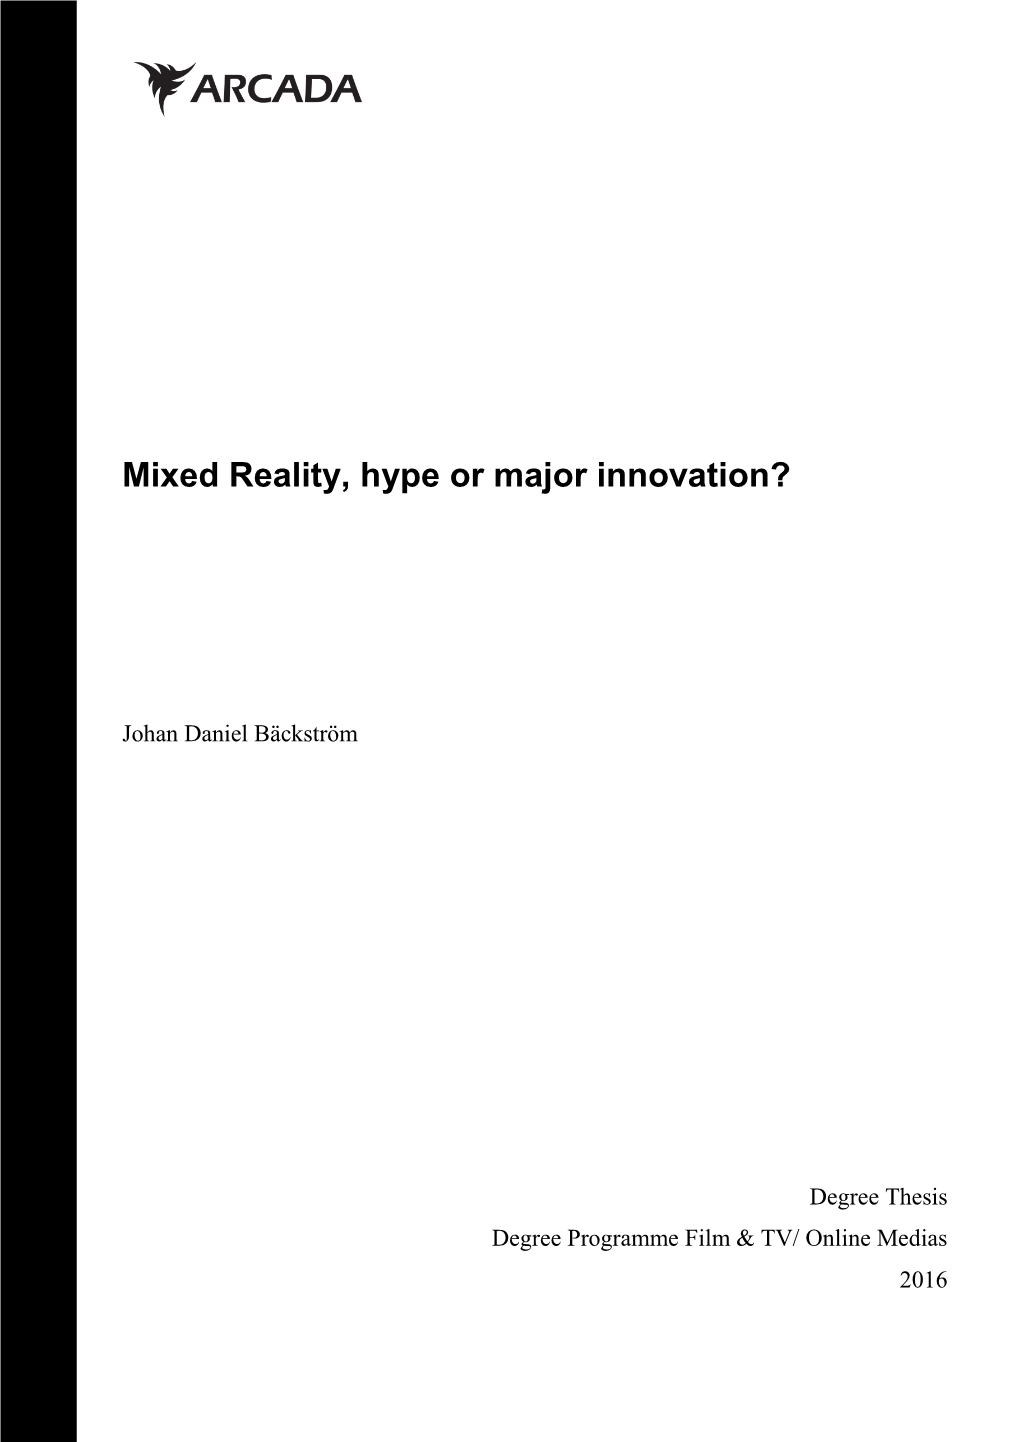 Mixed Reality, Hype Or Major Innovation?